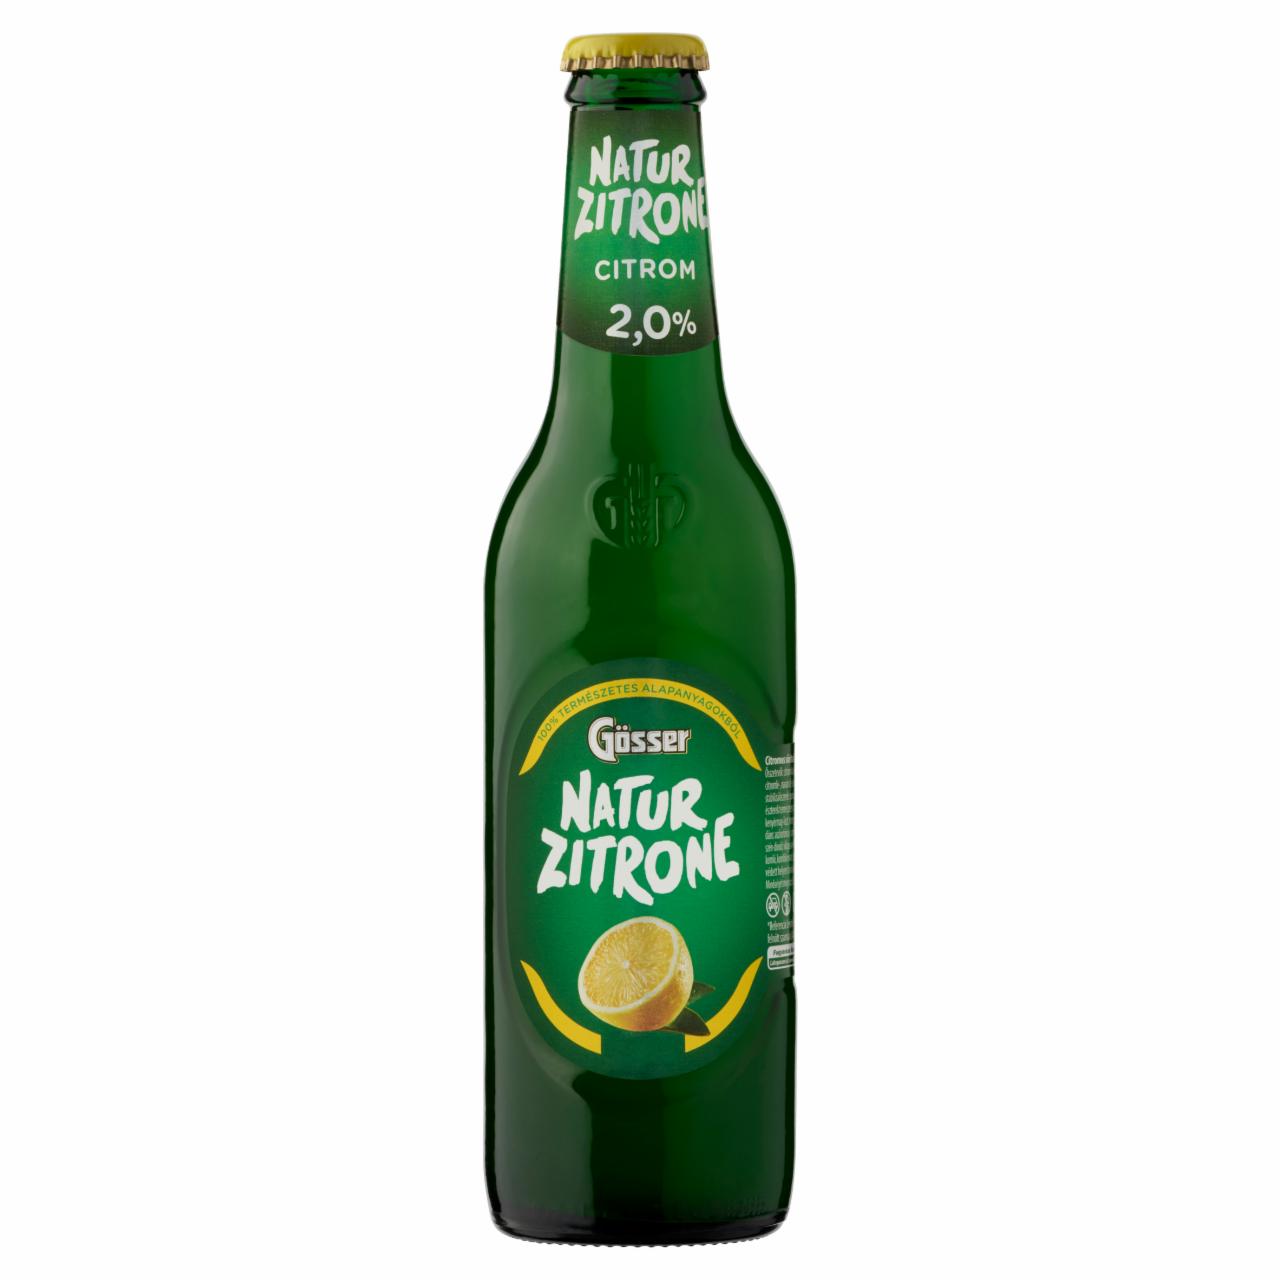 Képek - Natur Zitrone citromos sörital 2% 0,33 l